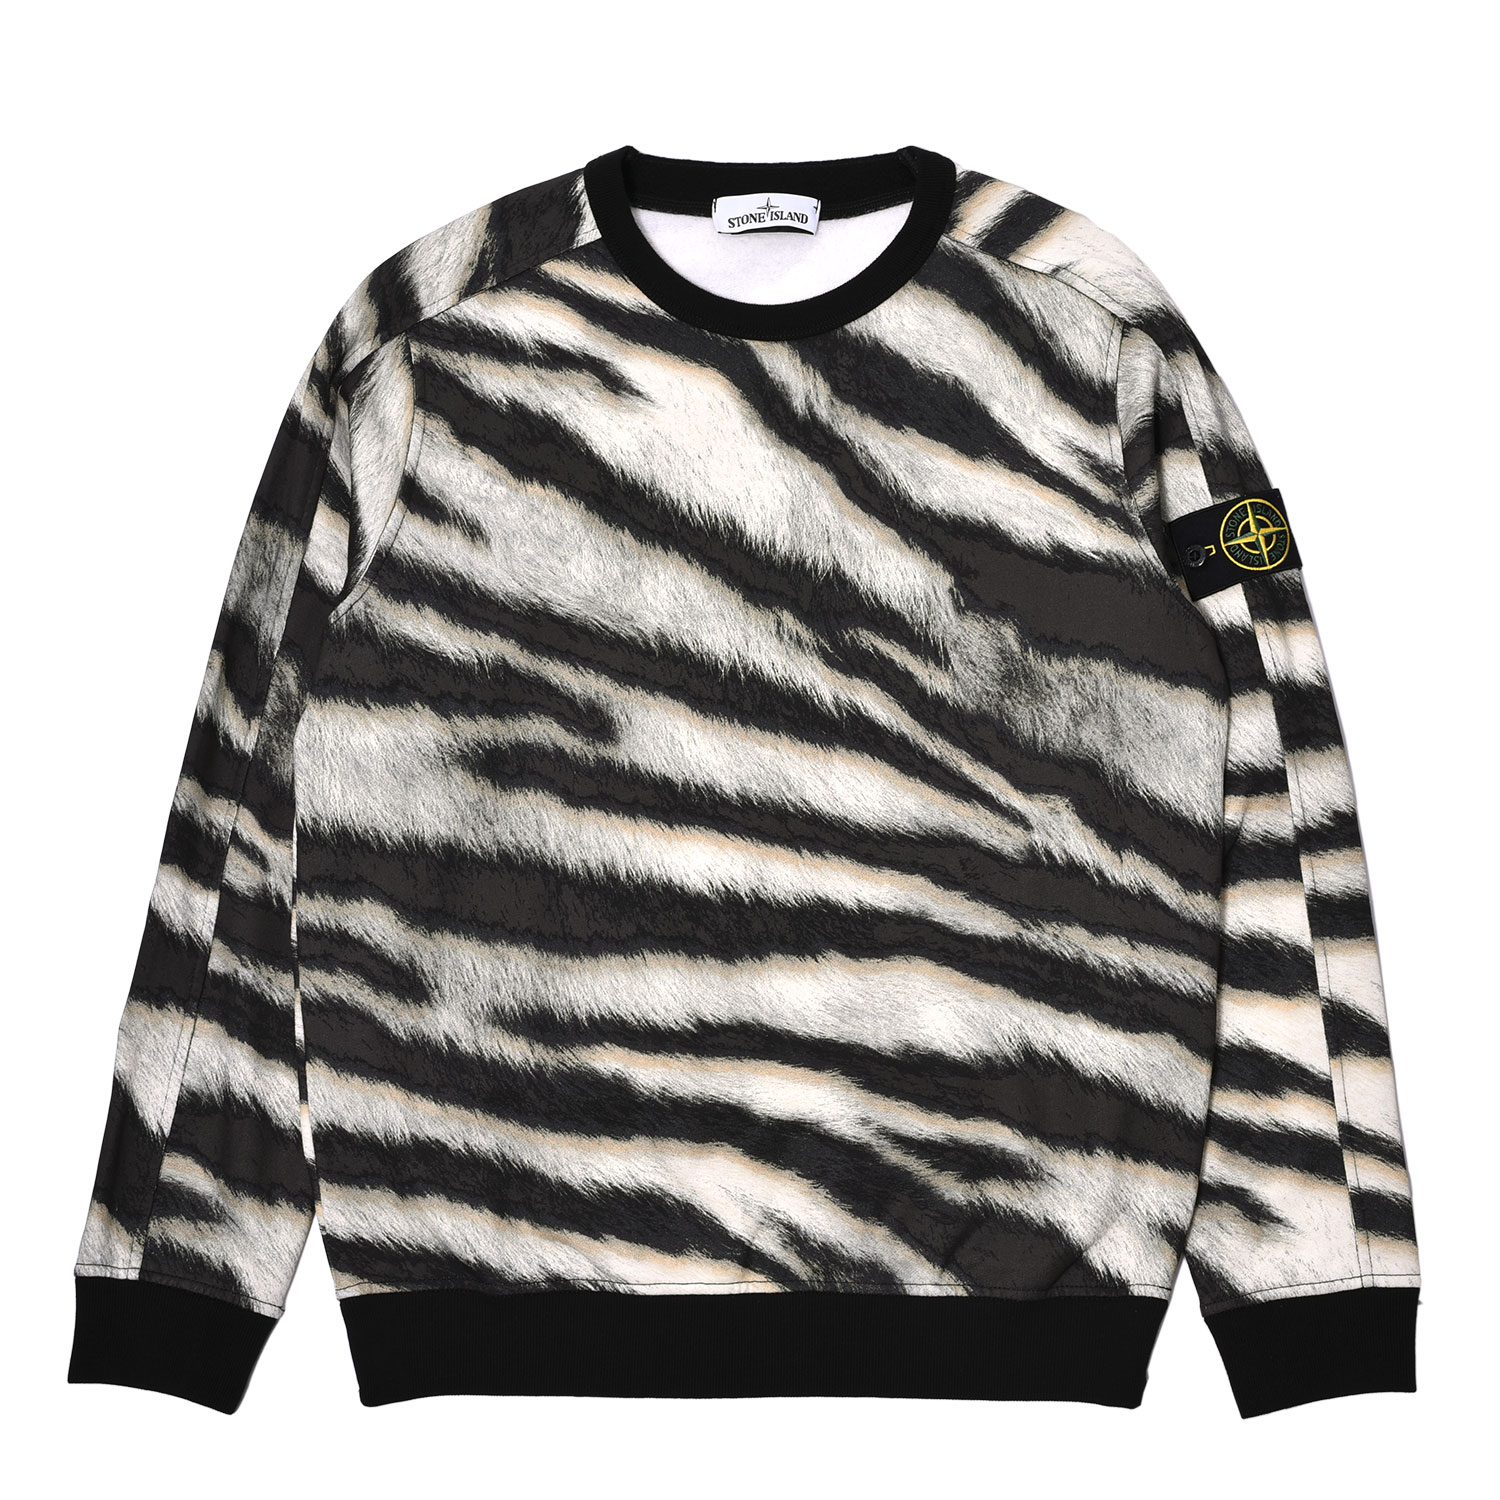 Stone Island Tiger Camo Sweatshirt | FIRMAMENT - Berlin Renaissance